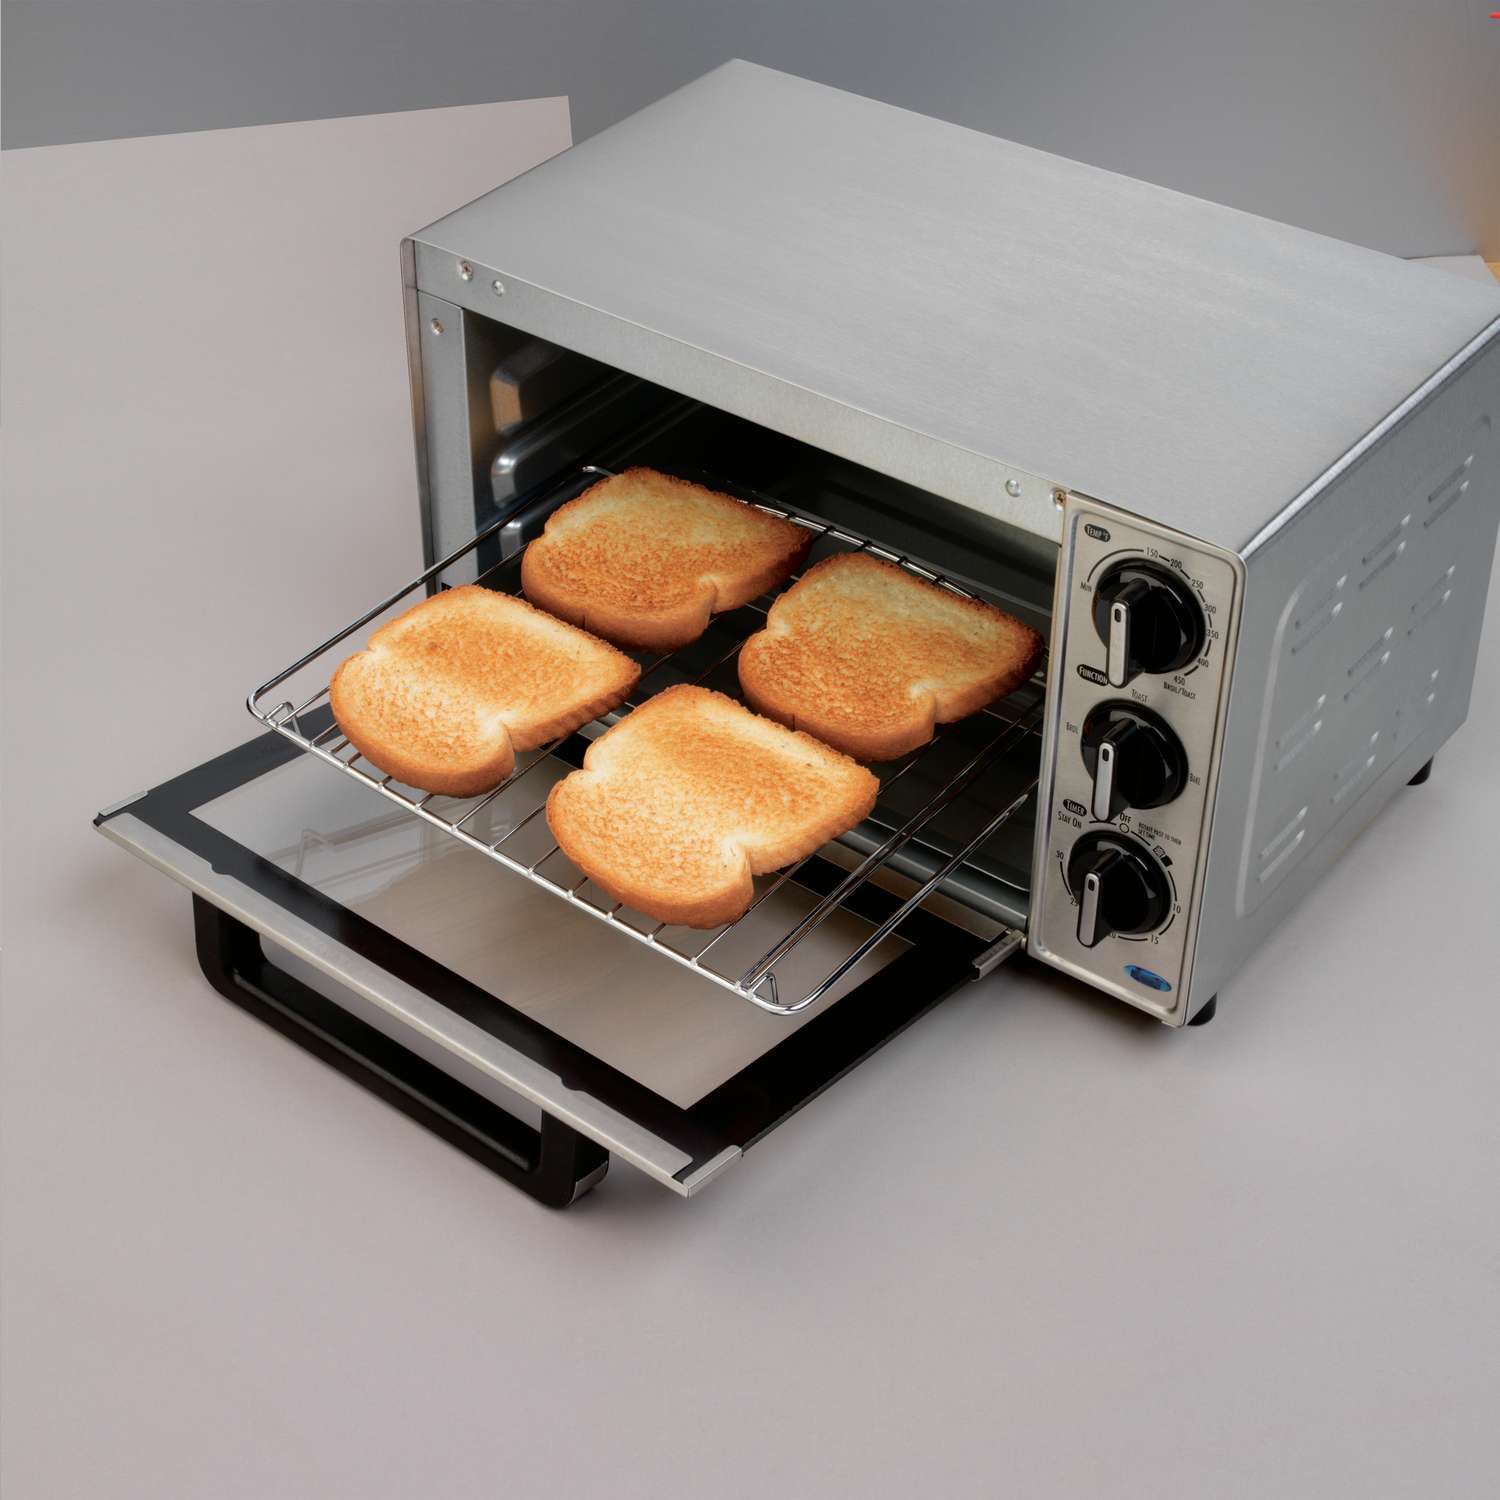 Rent the Hamilton Beach Toaster Oven